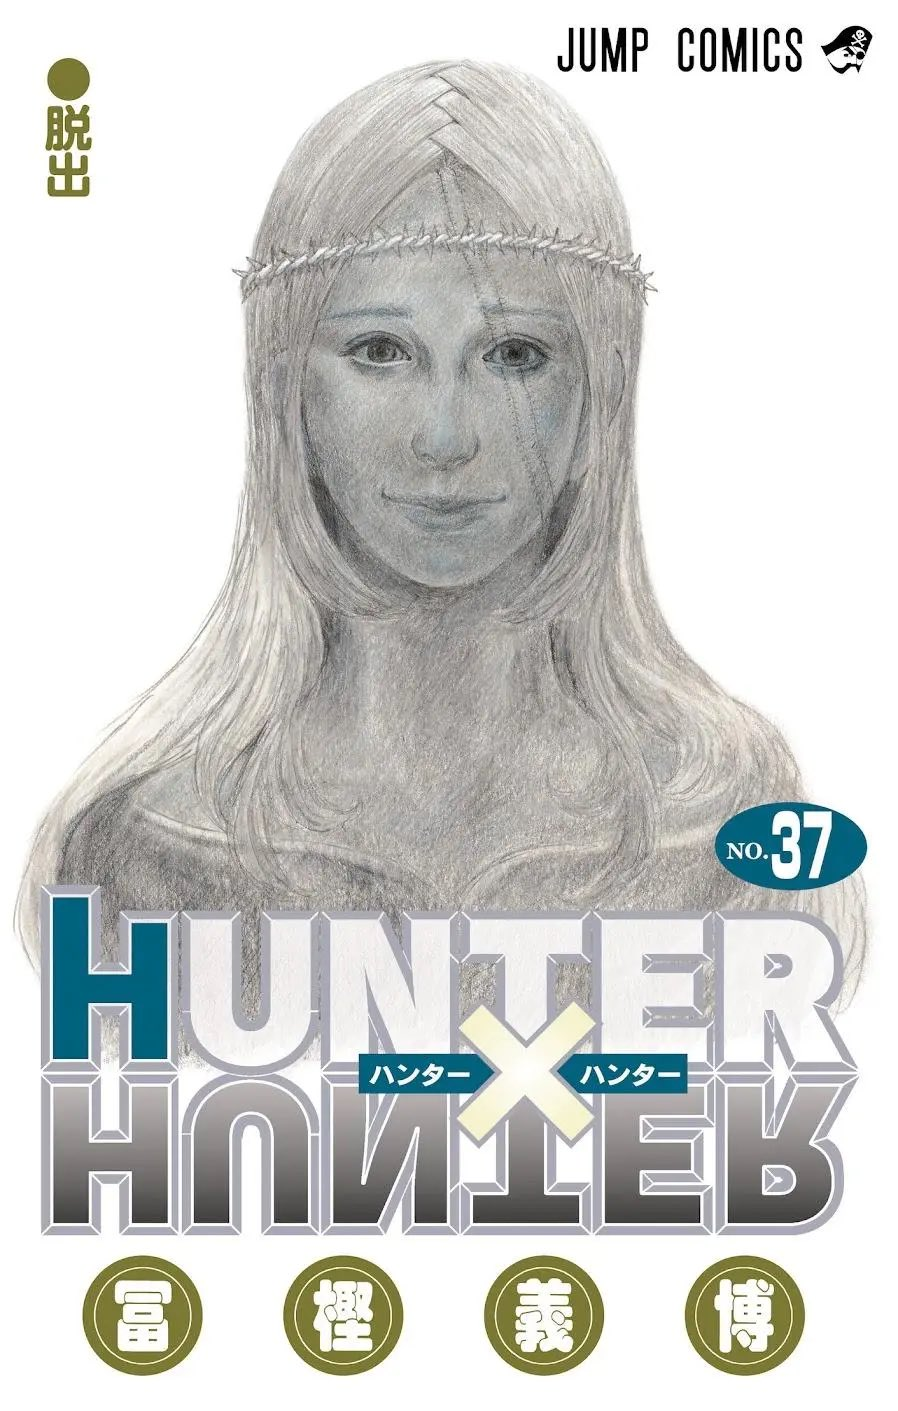 Hunter x Hunter manga creator teases new chapters, gains 1 million  followers in 24 hours